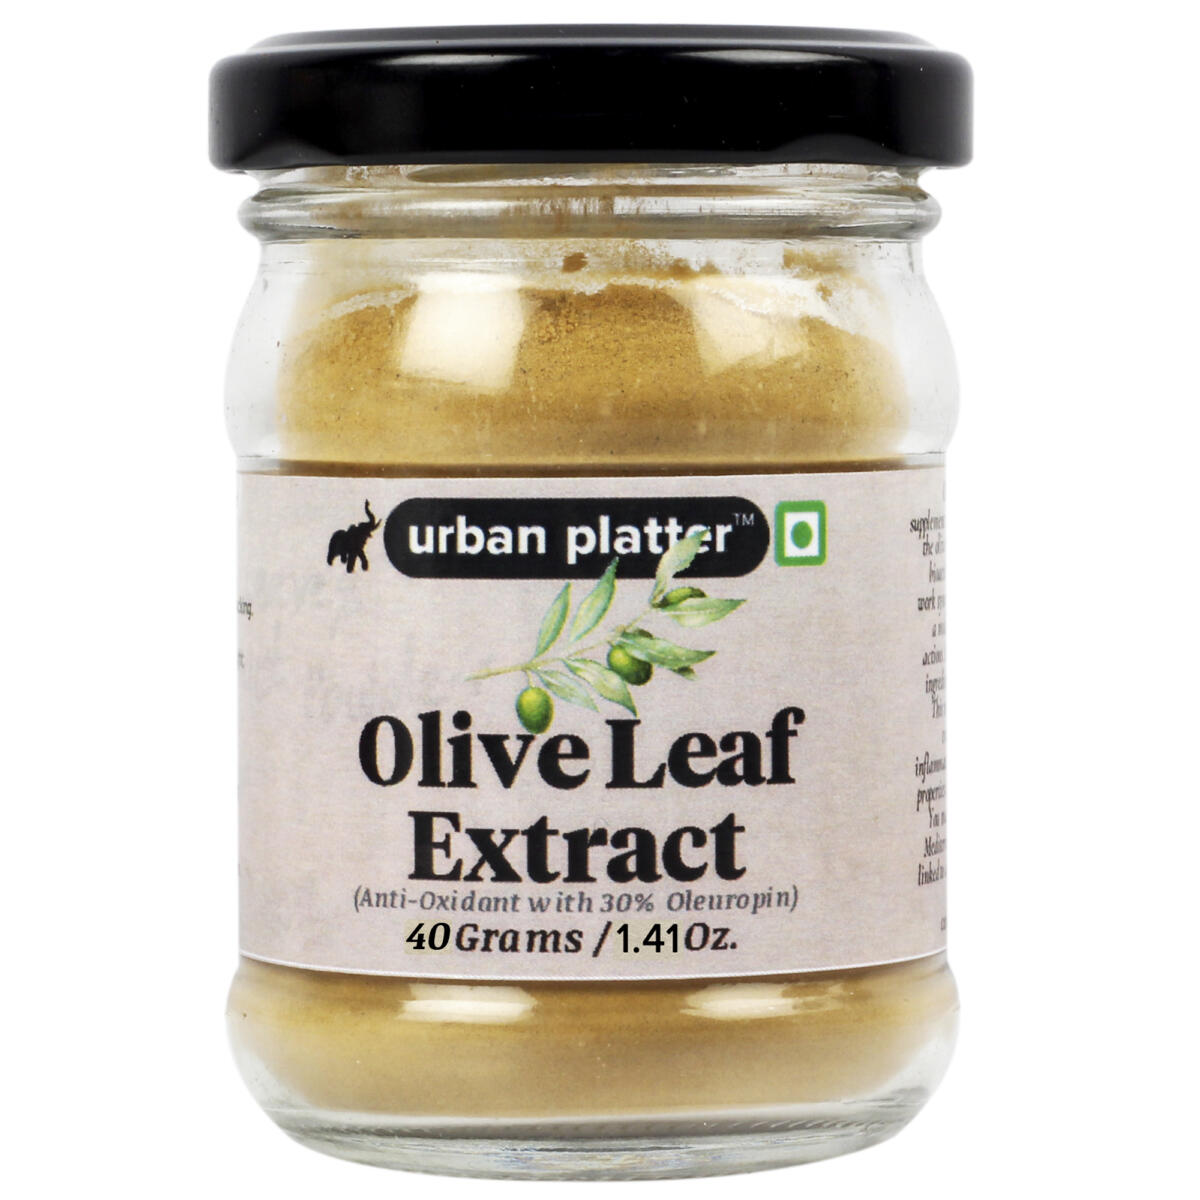 Urban Platter Olive Leaf Extract Powder, 40g / 1.4oz [Antioxidant, Organic Olea Europaea, Vegan] Super Foods Urban Platter